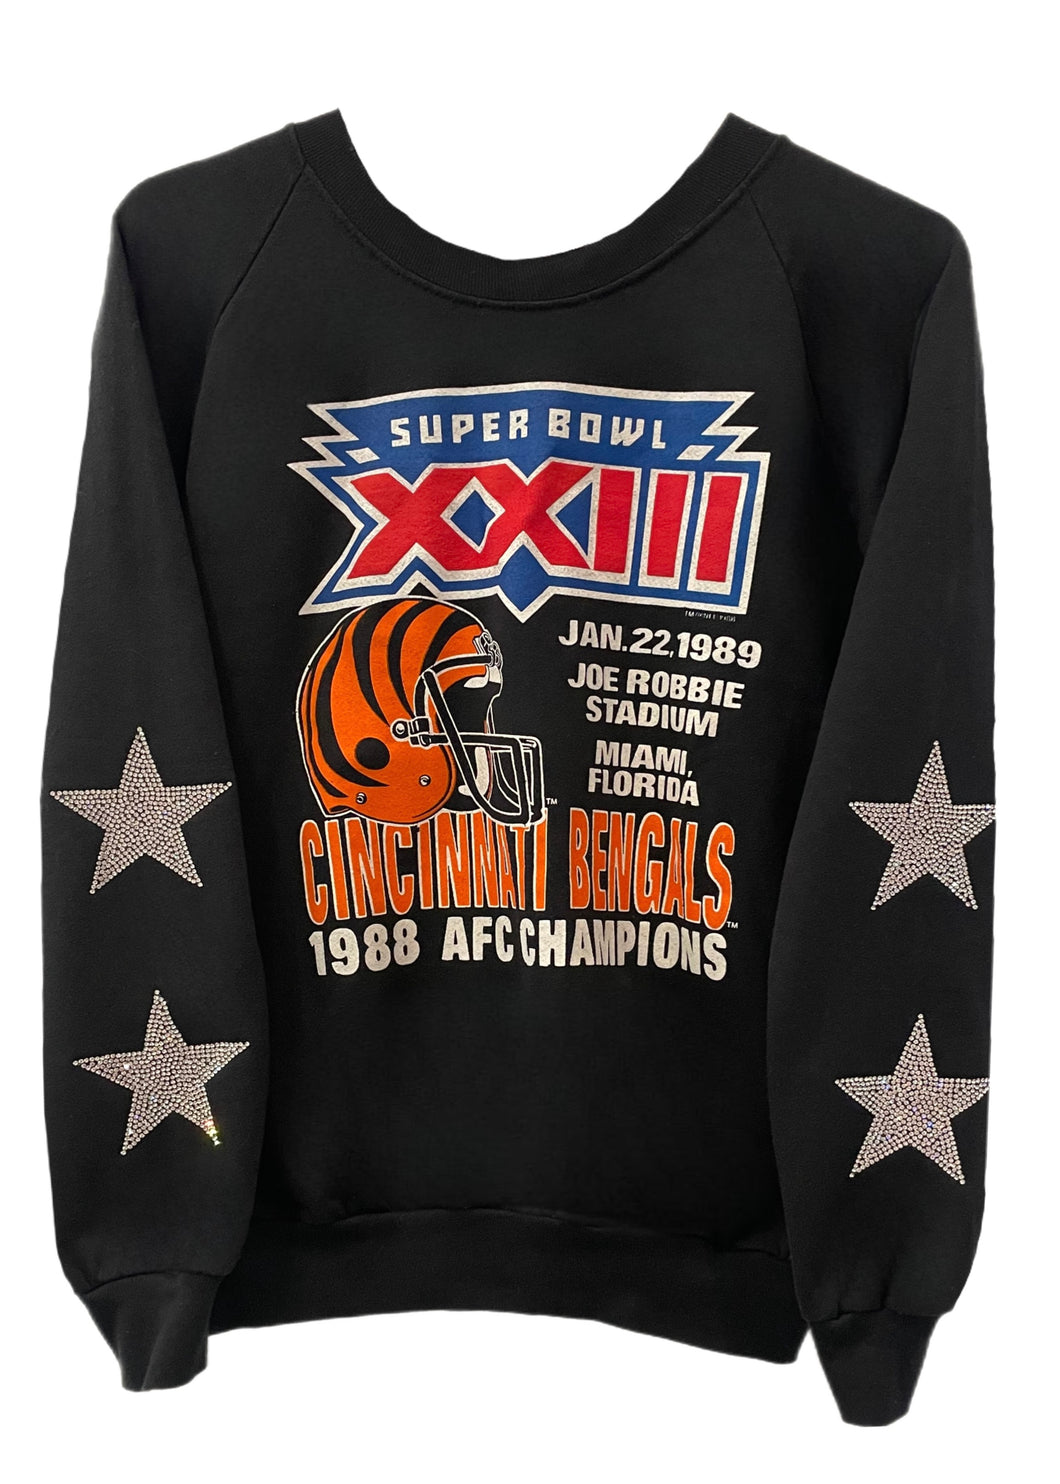 Cincinnati Bengals, NFL One of a KIND Vintage “Rare Find” Sweatshirt with Crystal Star Design